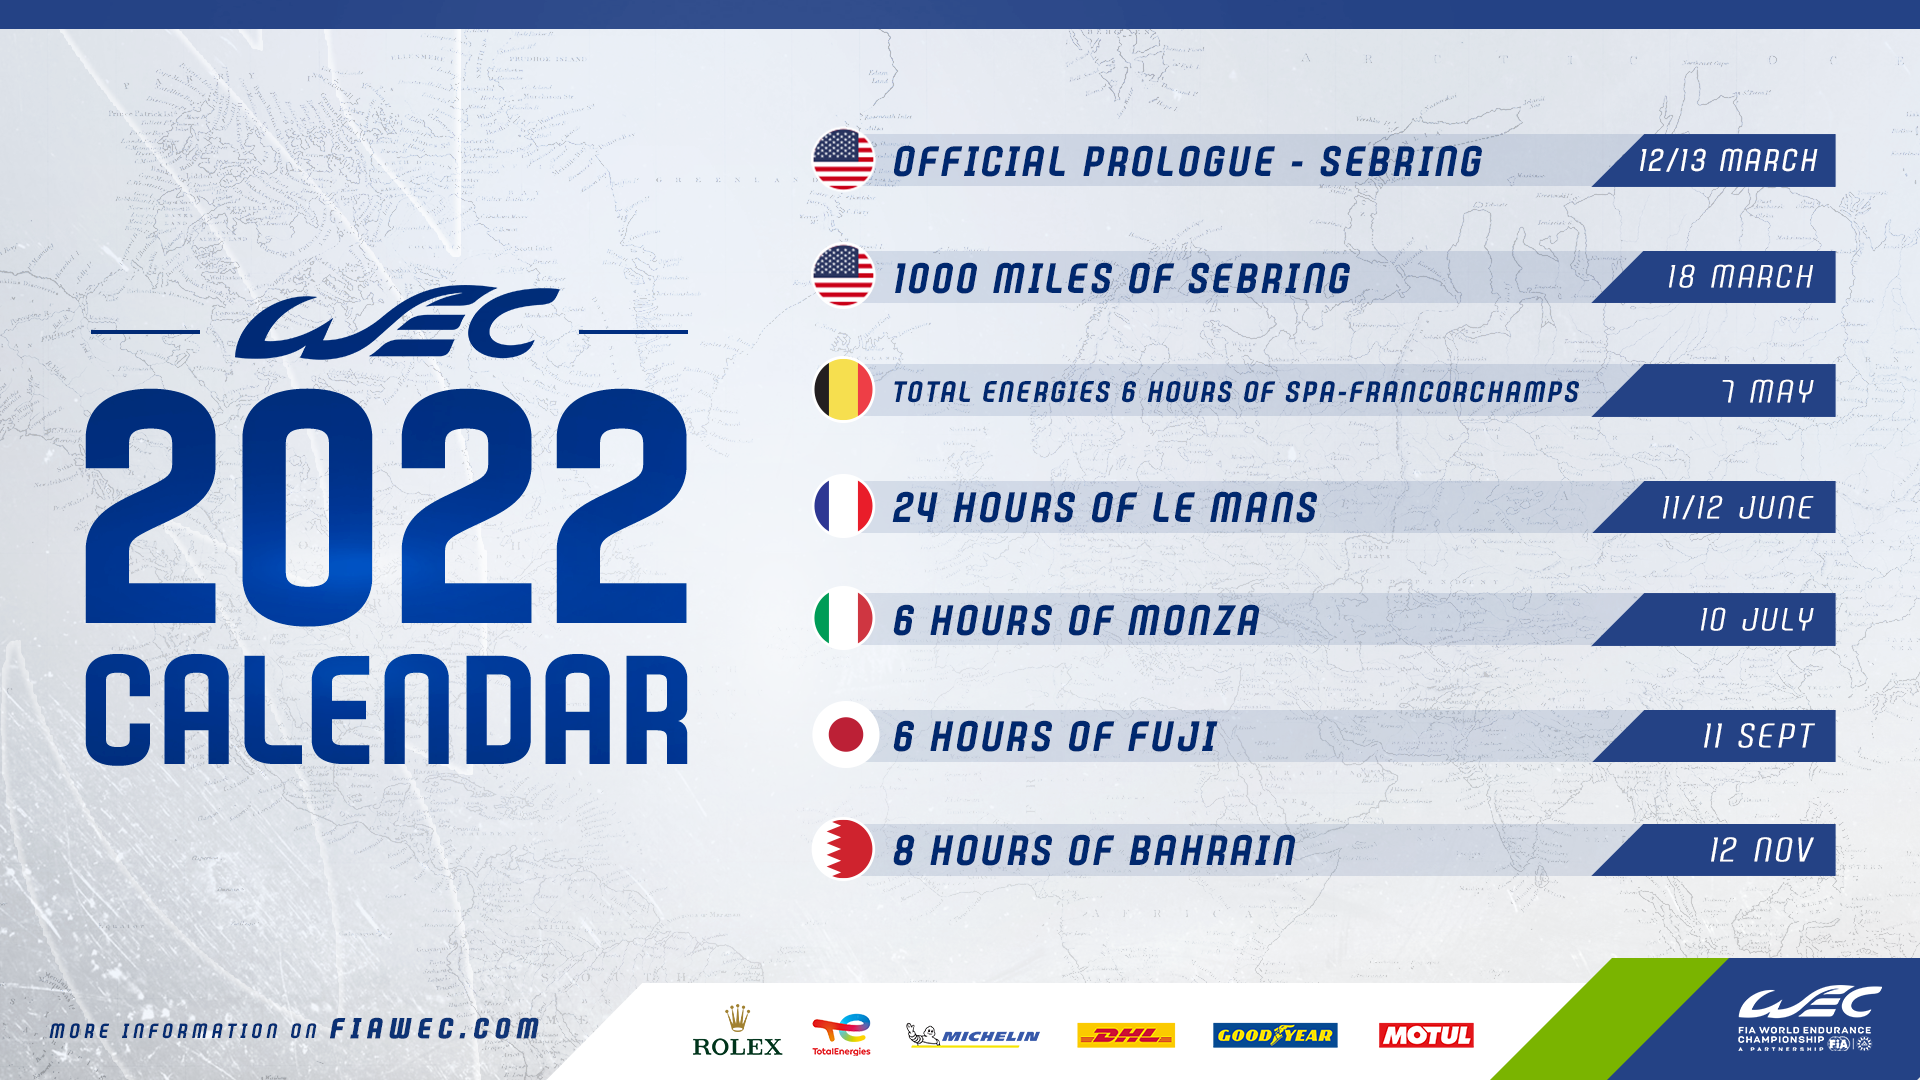 Congress Calendar 2022 Wec: 2022 Calendar Revealed | Federation Internationale De L'automobile